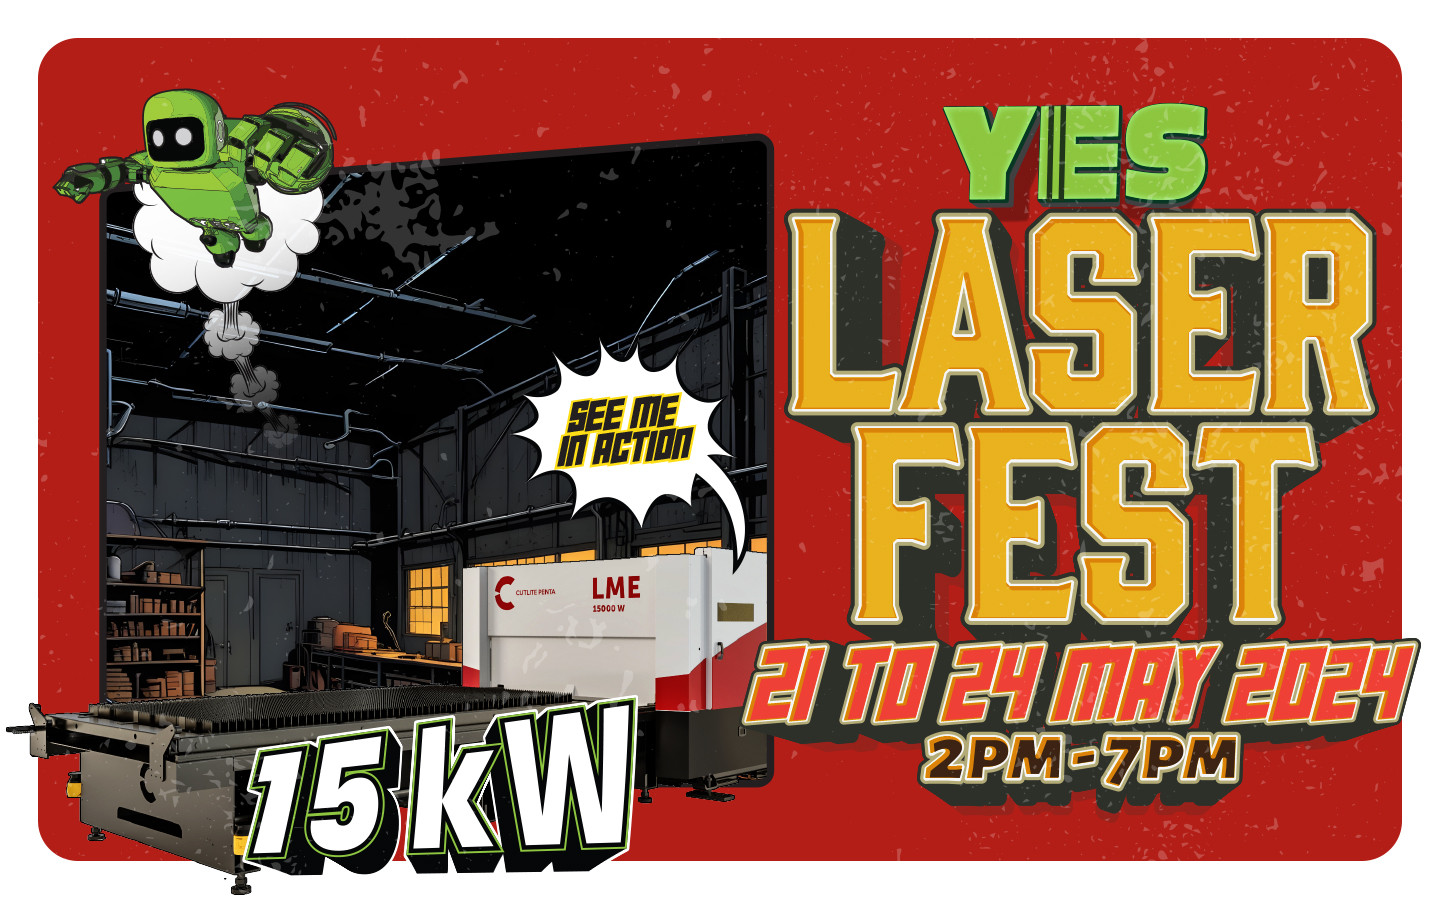 YES Laser Fest